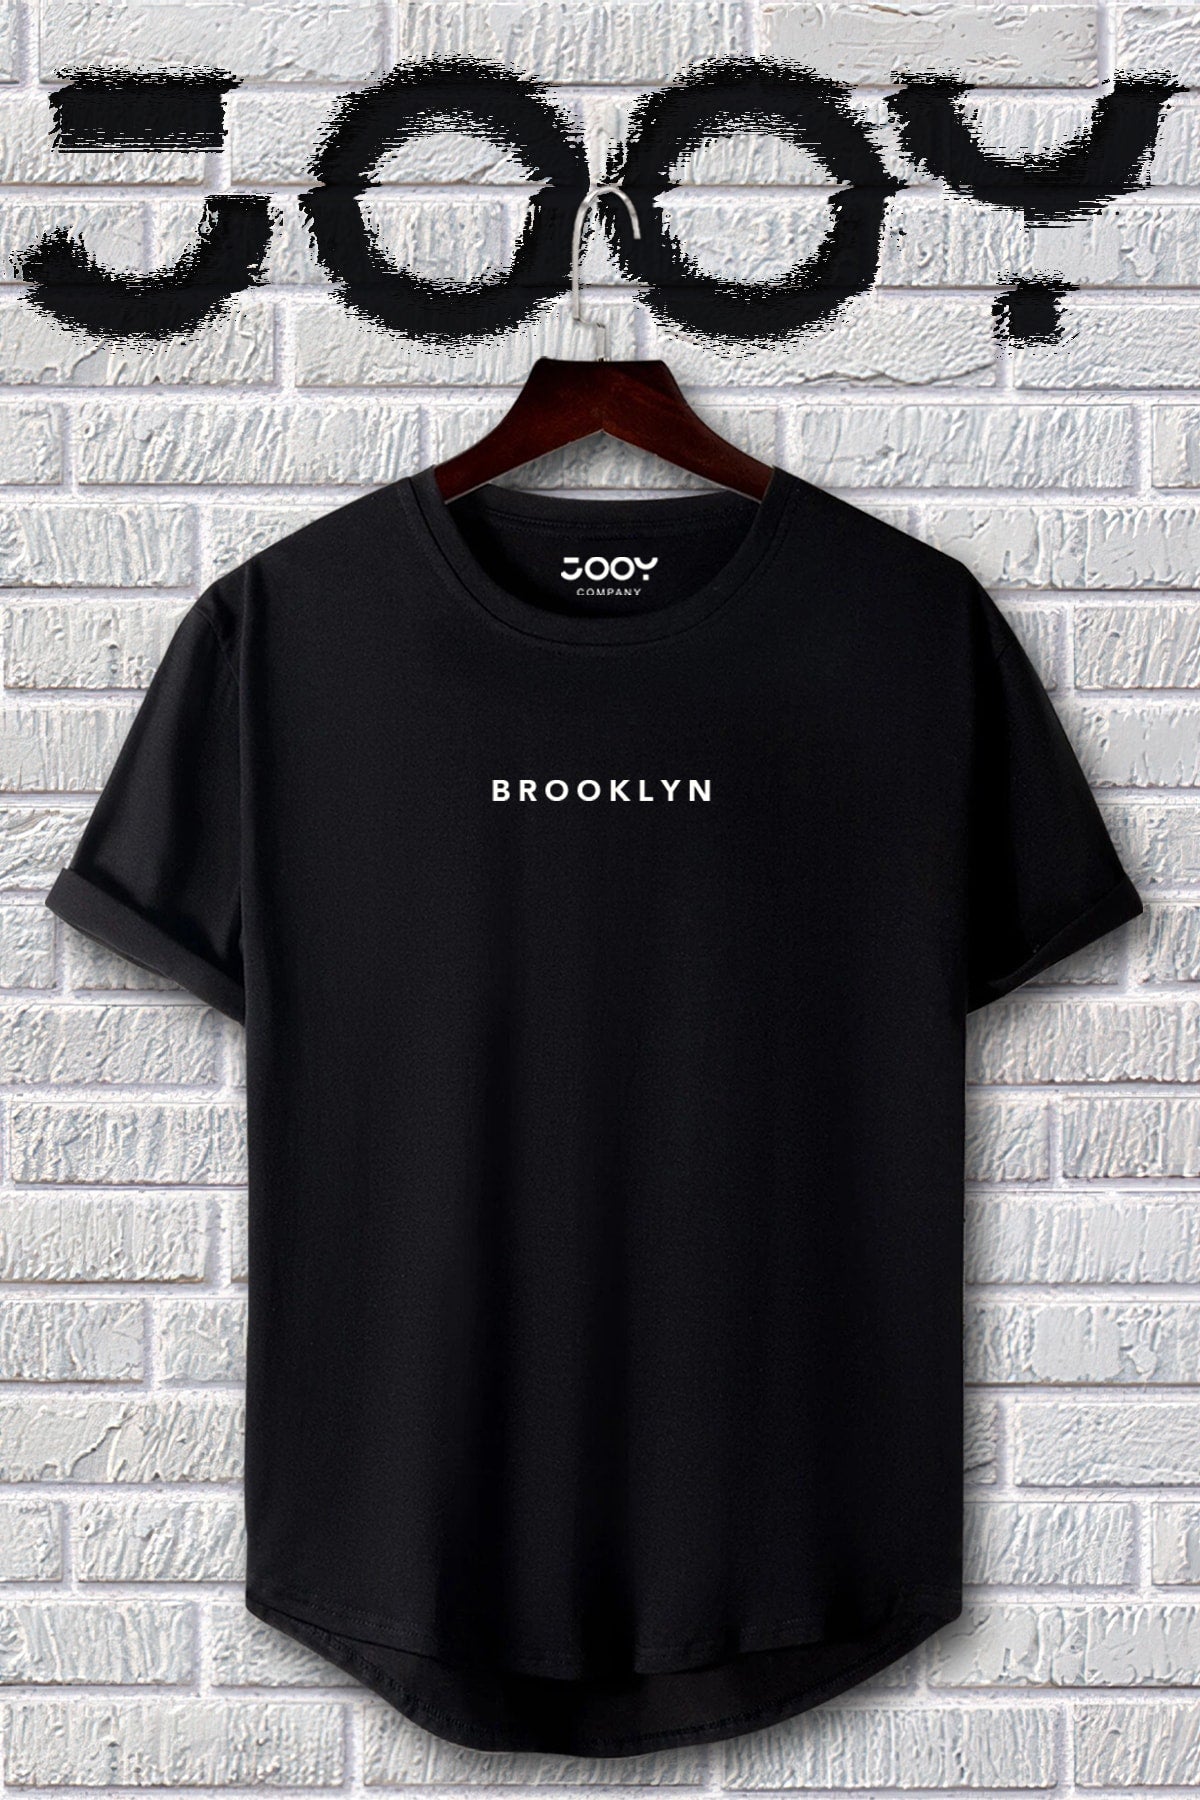 Brooklyn Printed Black and White Oval Cut Tshirt Set of 2